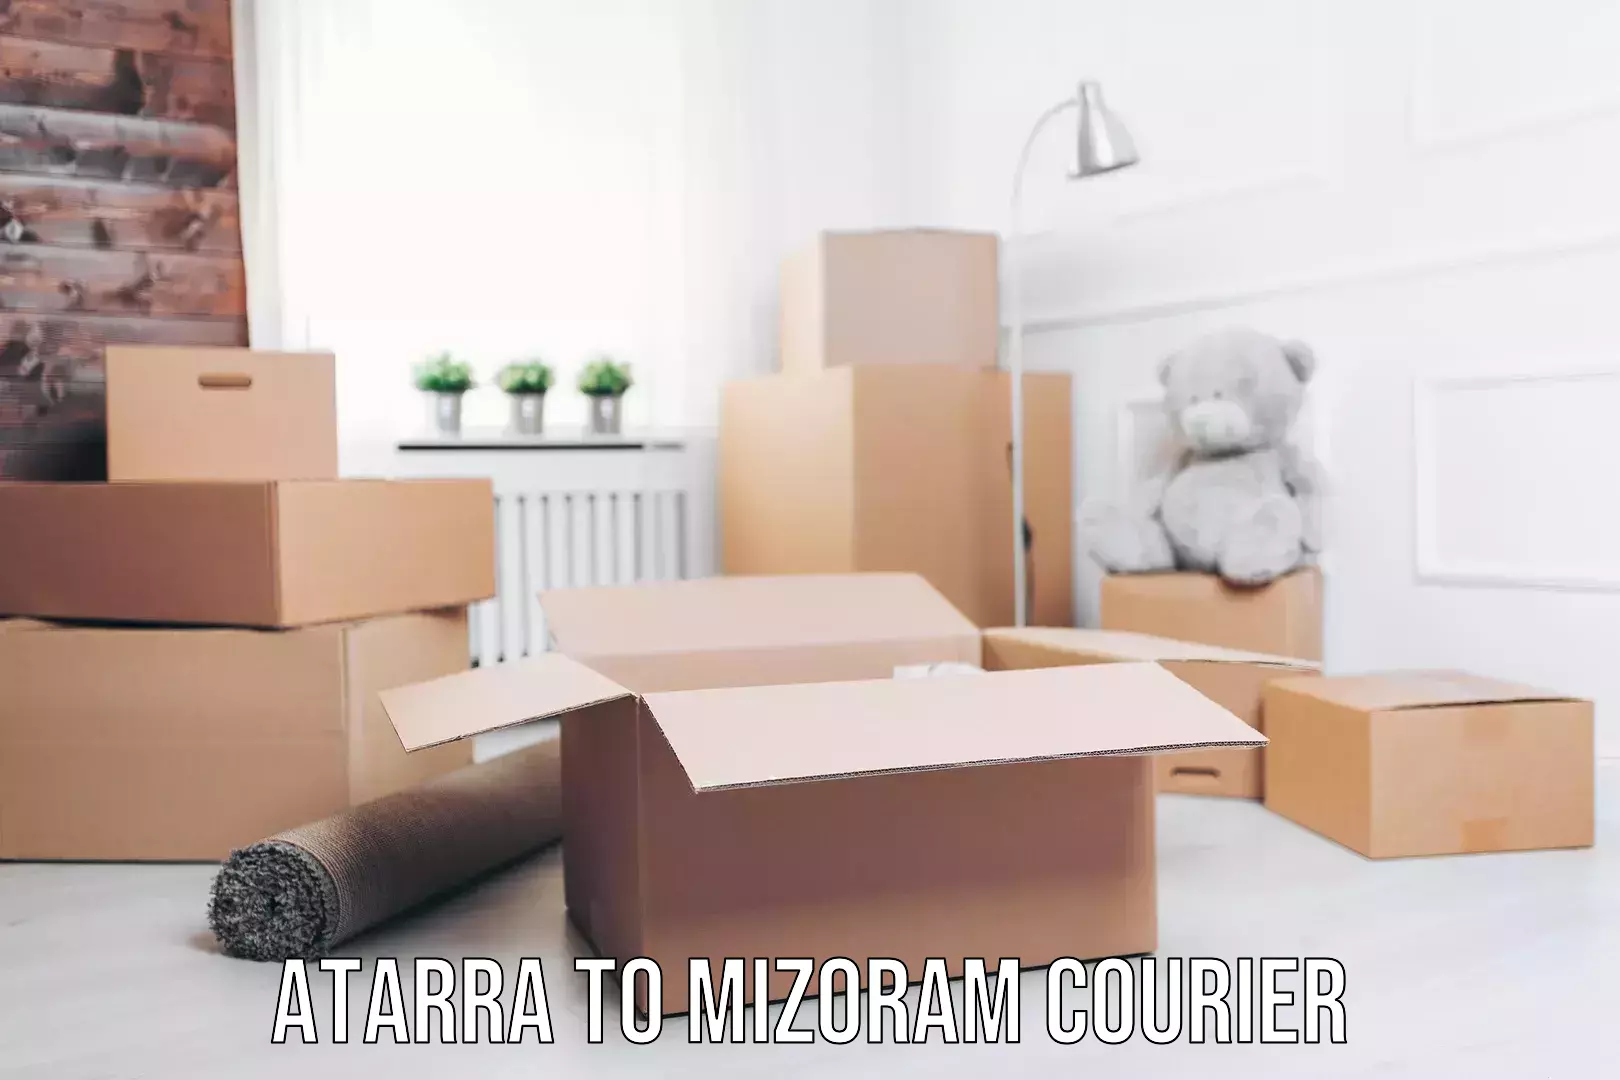 Digital courier platforms Atarra to Mizoram